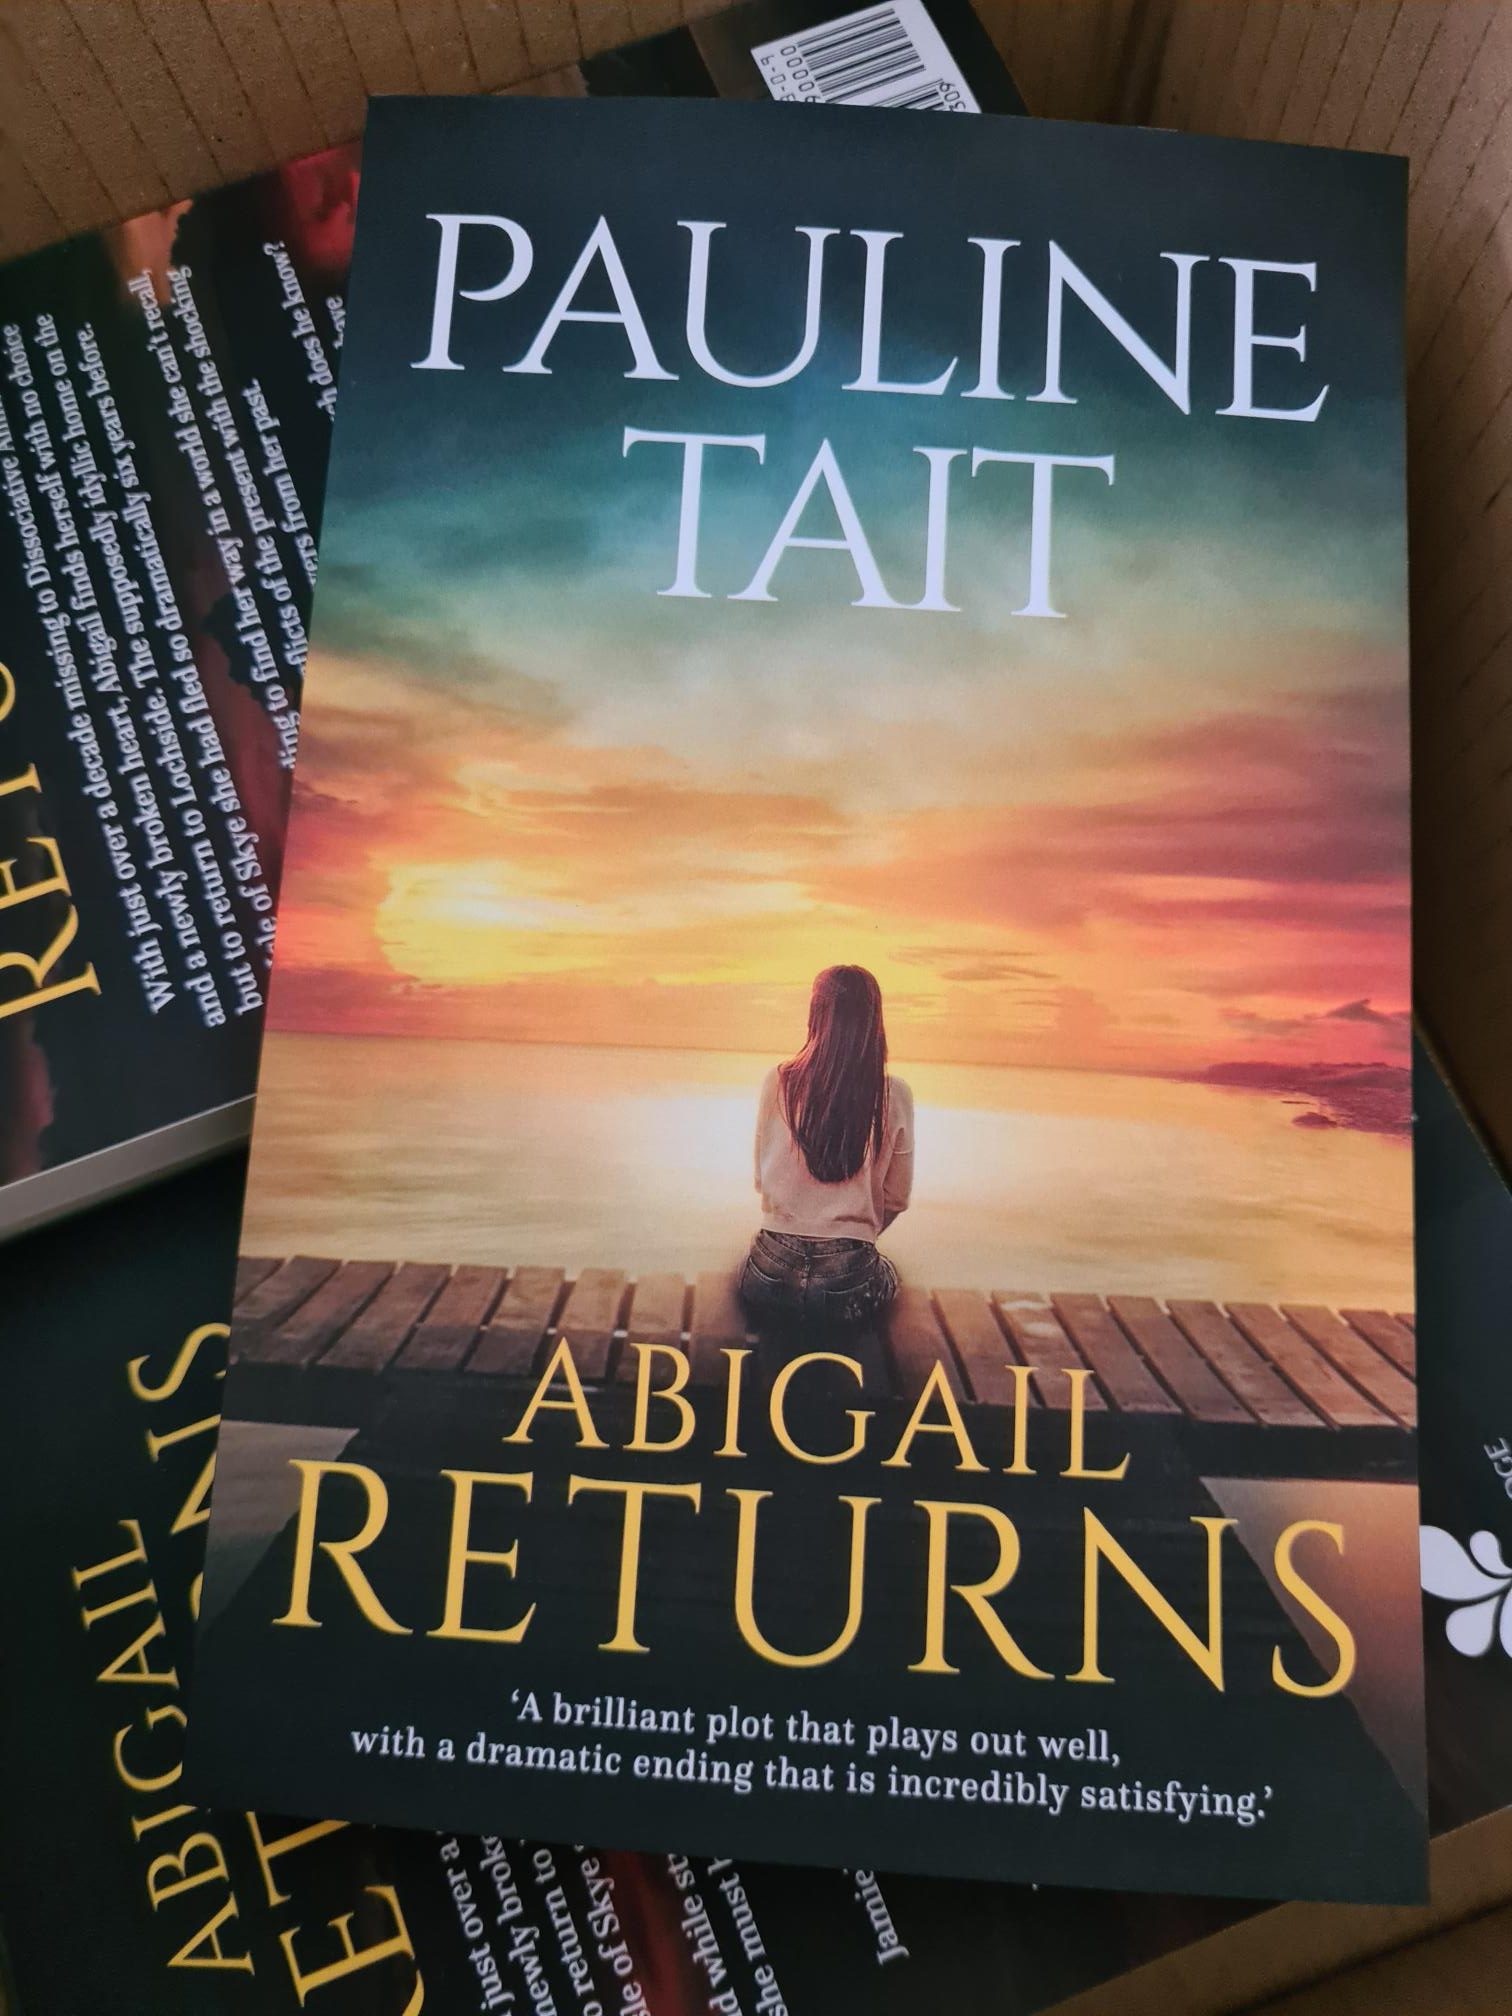 Abigail ReturnsPauline Tait author Novelist #1 Hot New Release